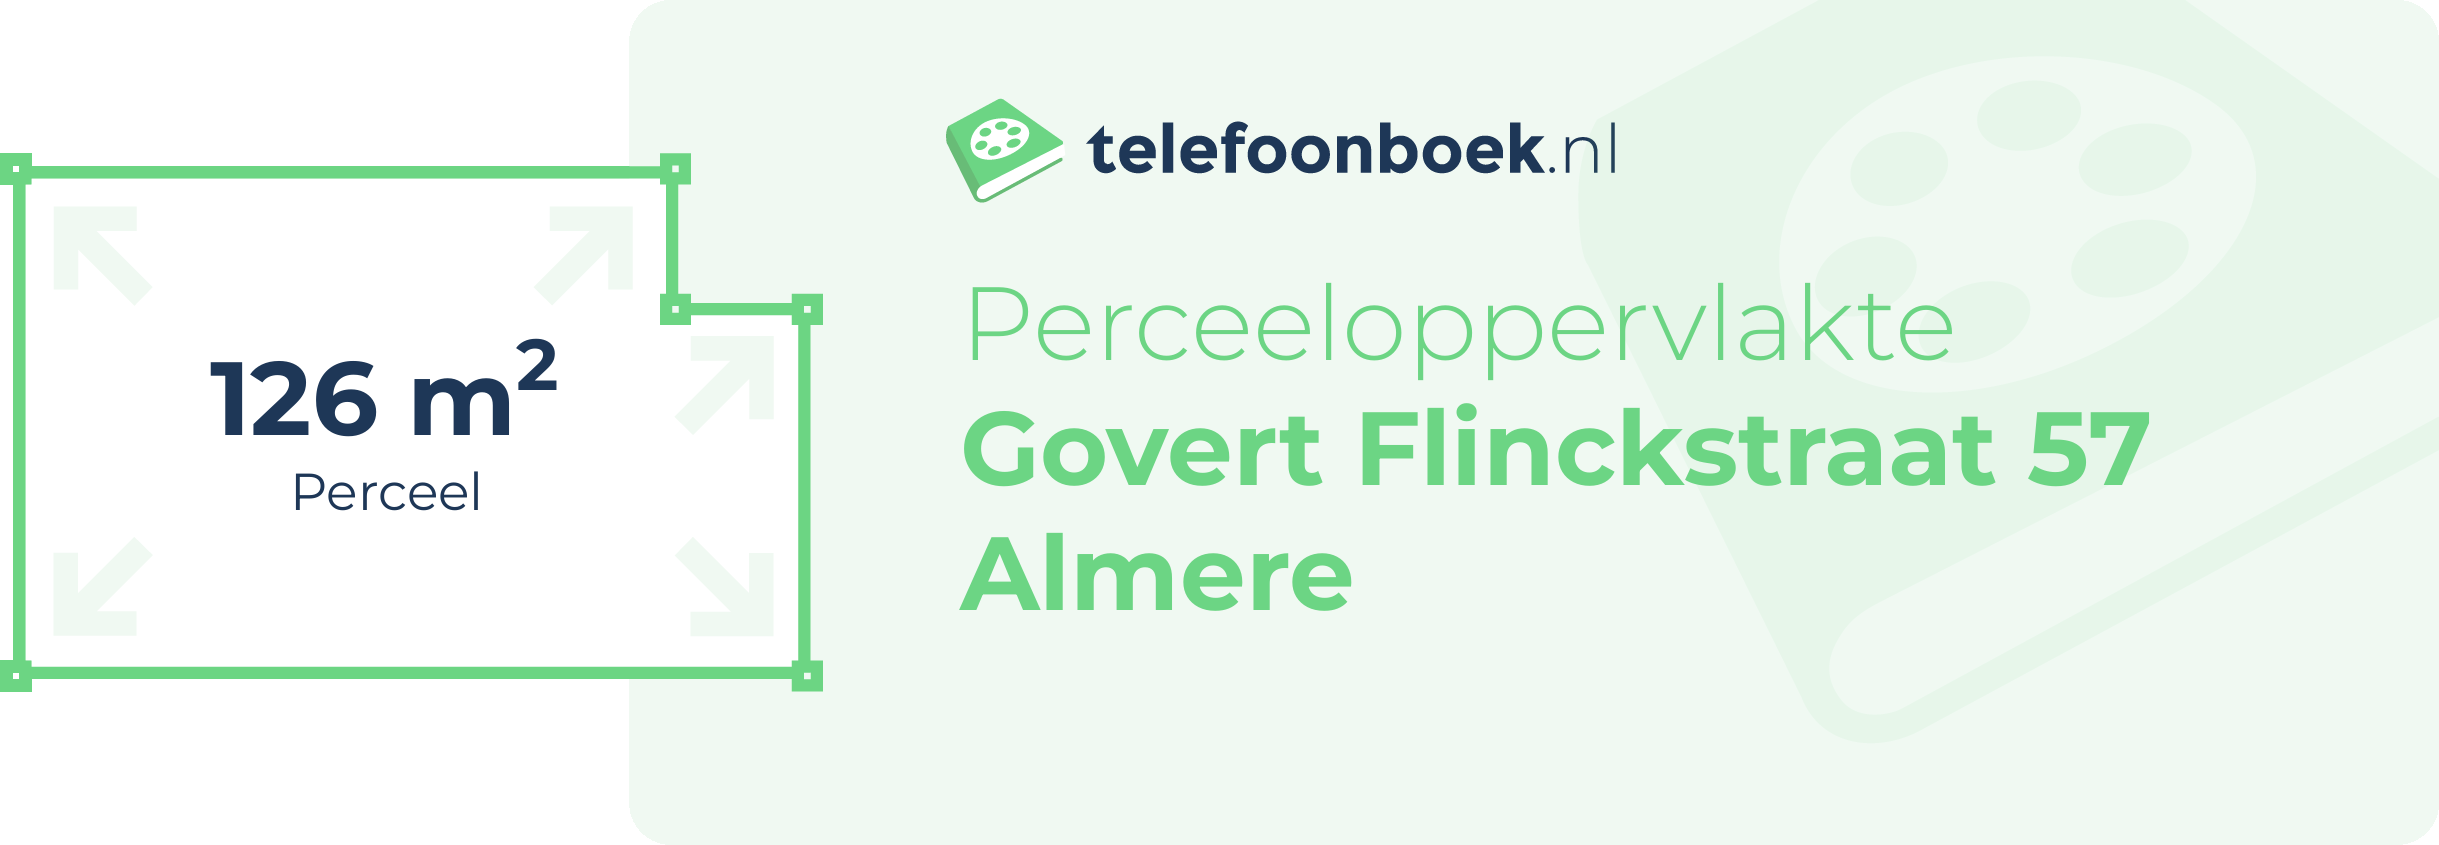 Perceeloppervlakte Govert Flinckstraat 57 Almere